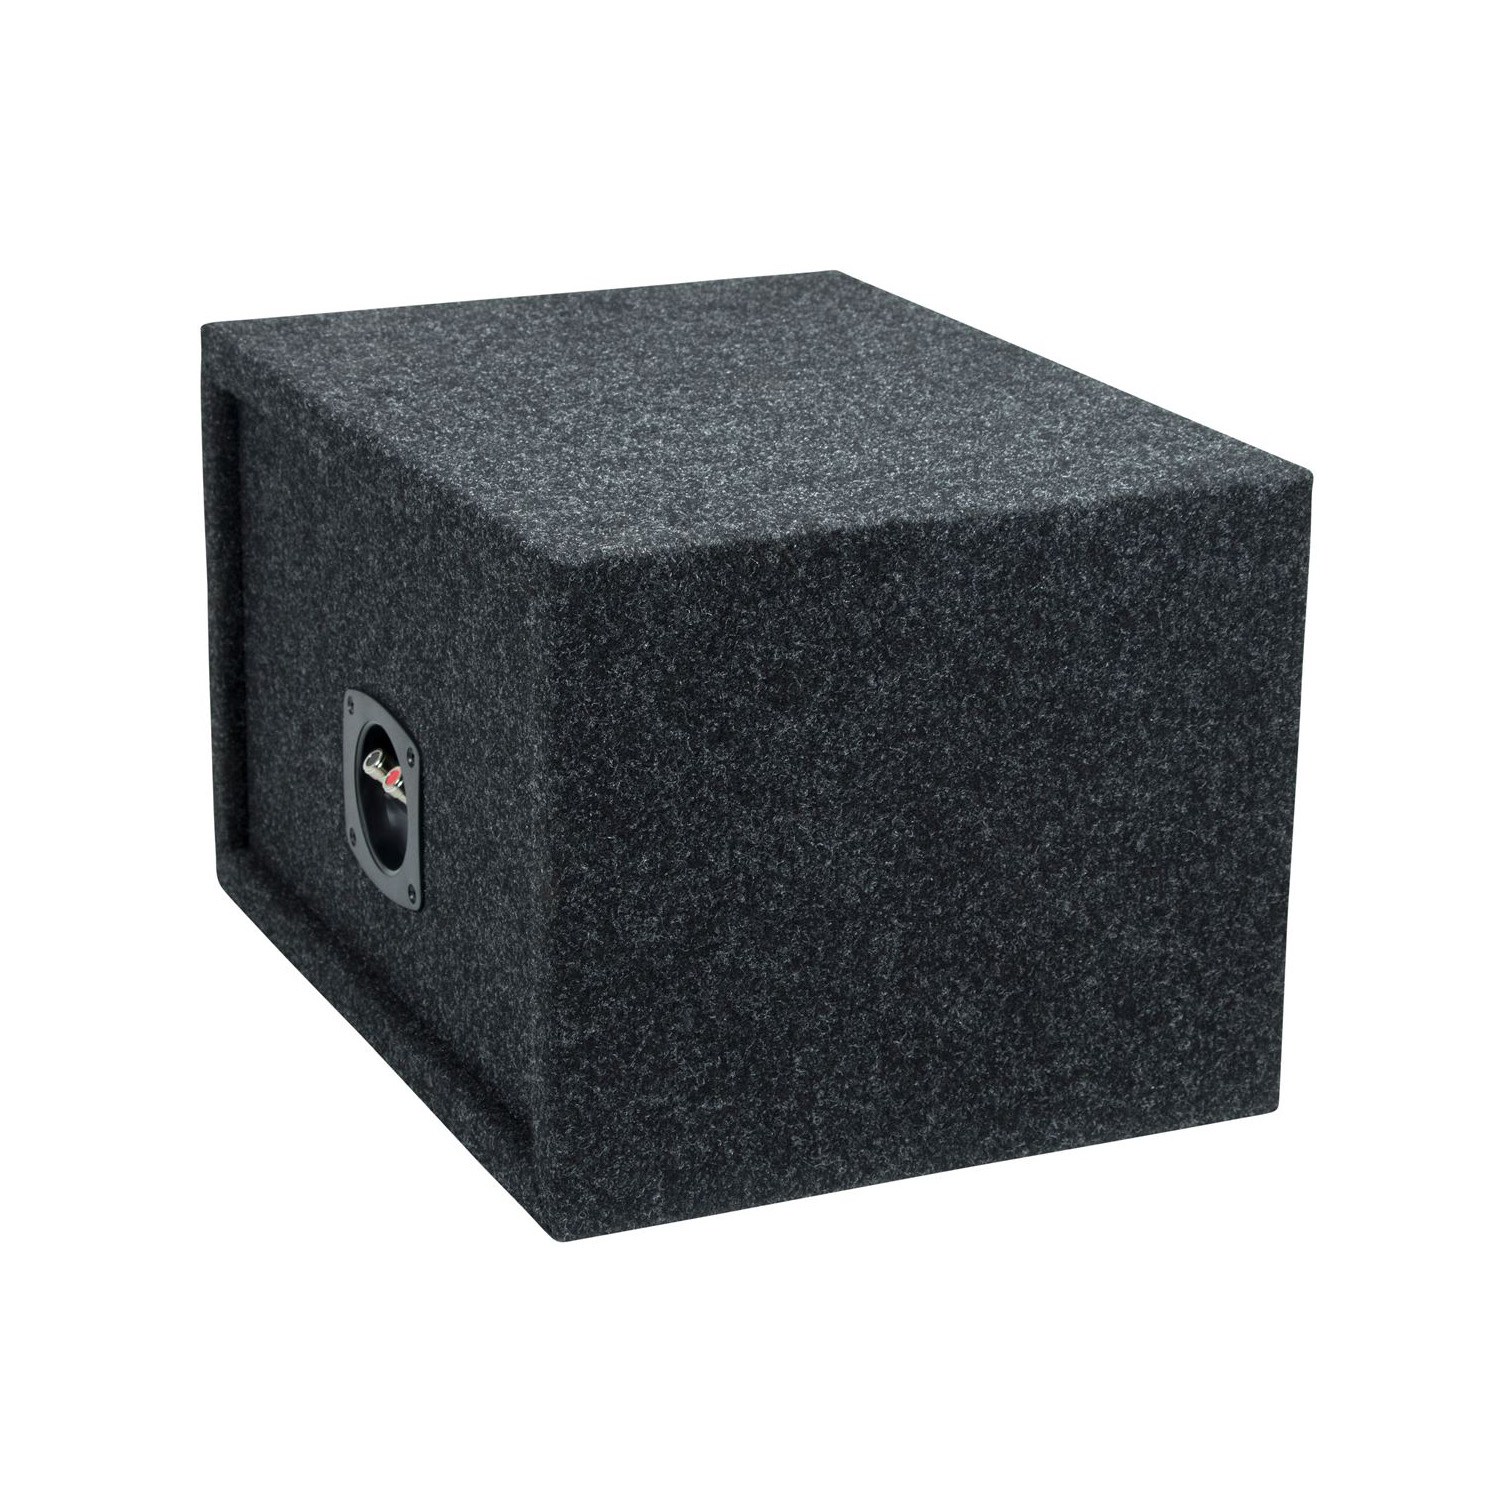 MDF Empty Bass Enclosure Speaker Box for Car Truck SUV, Wooden Car Subwoofer Box Empty Subwoofer Box